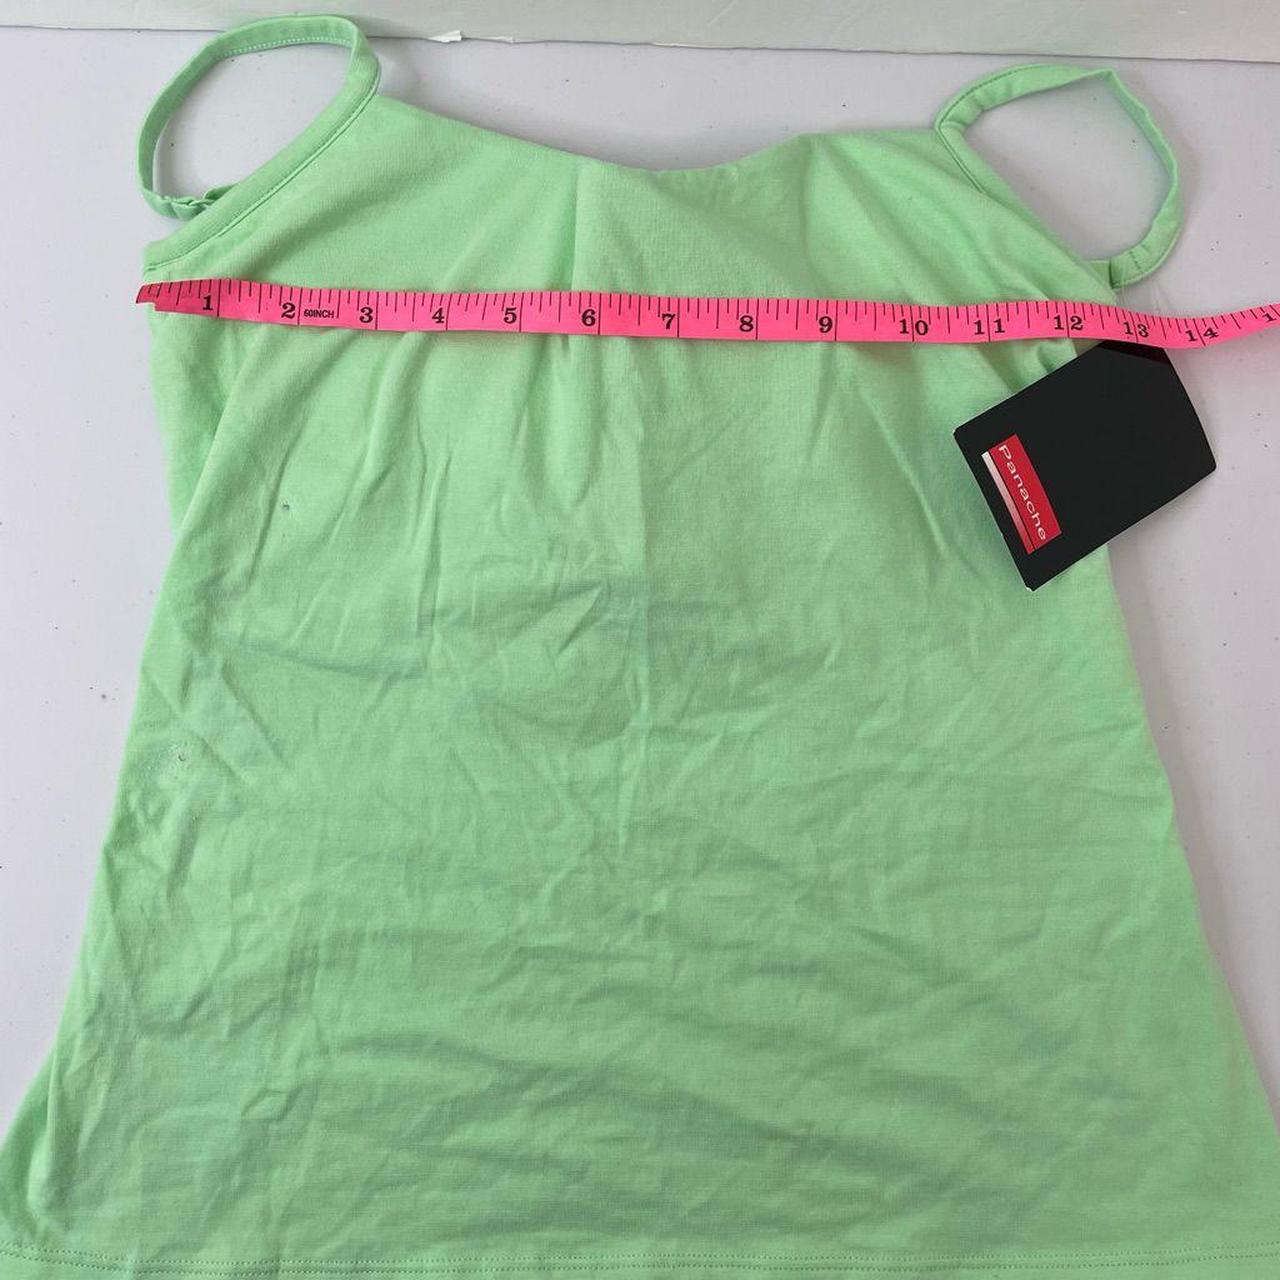 Panache Women's Green Vests-tanks-camis (3)